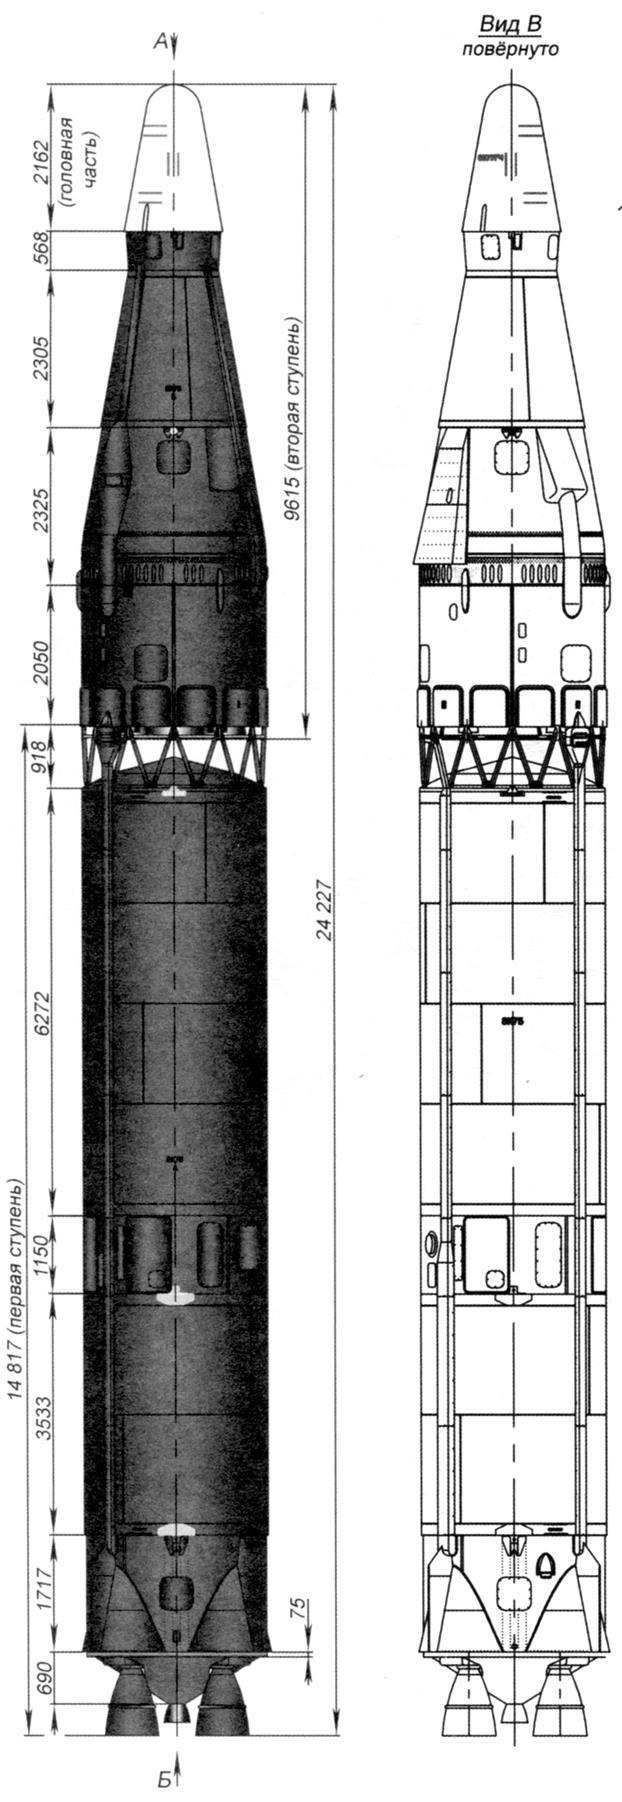 Intercontinental ballistic missile R-9A (index 8К75)